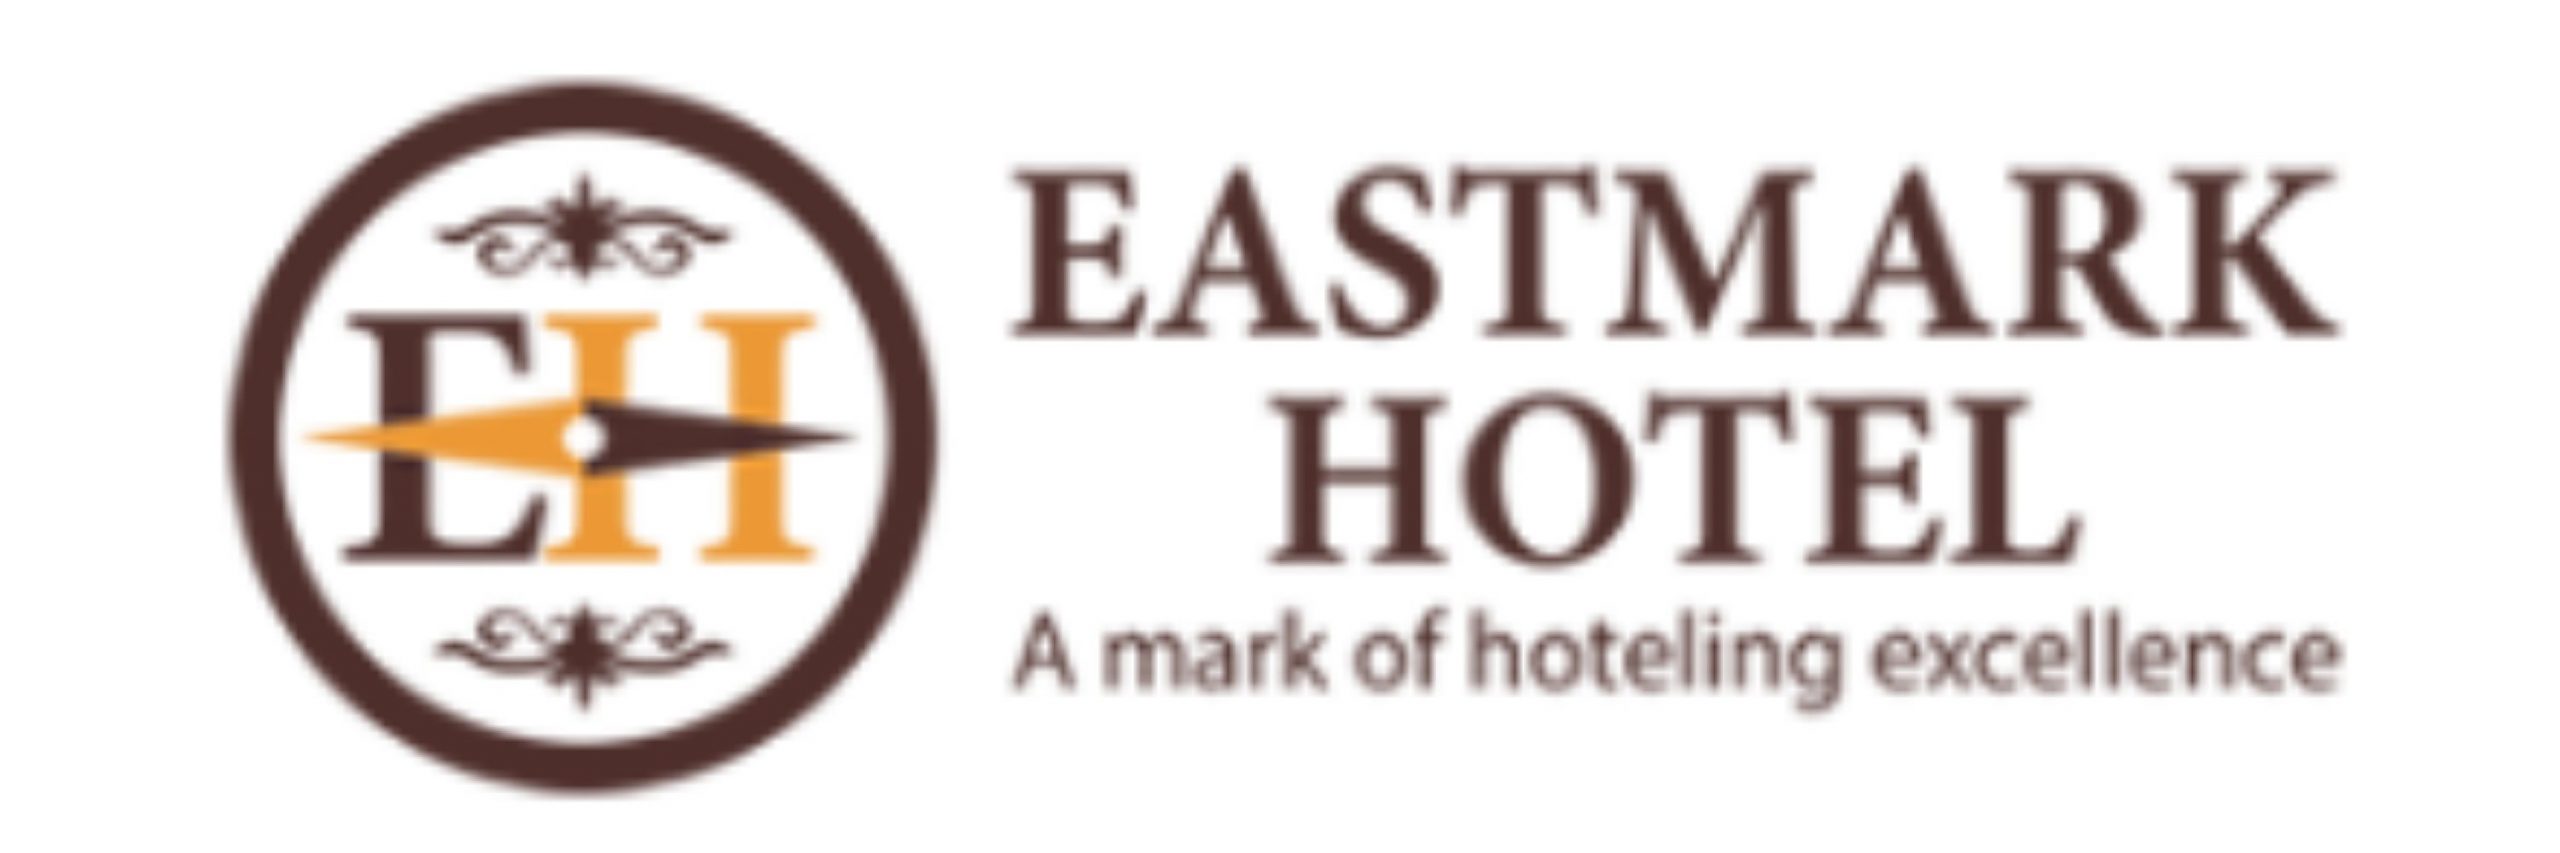 Eastmark Hotel |   The hotel